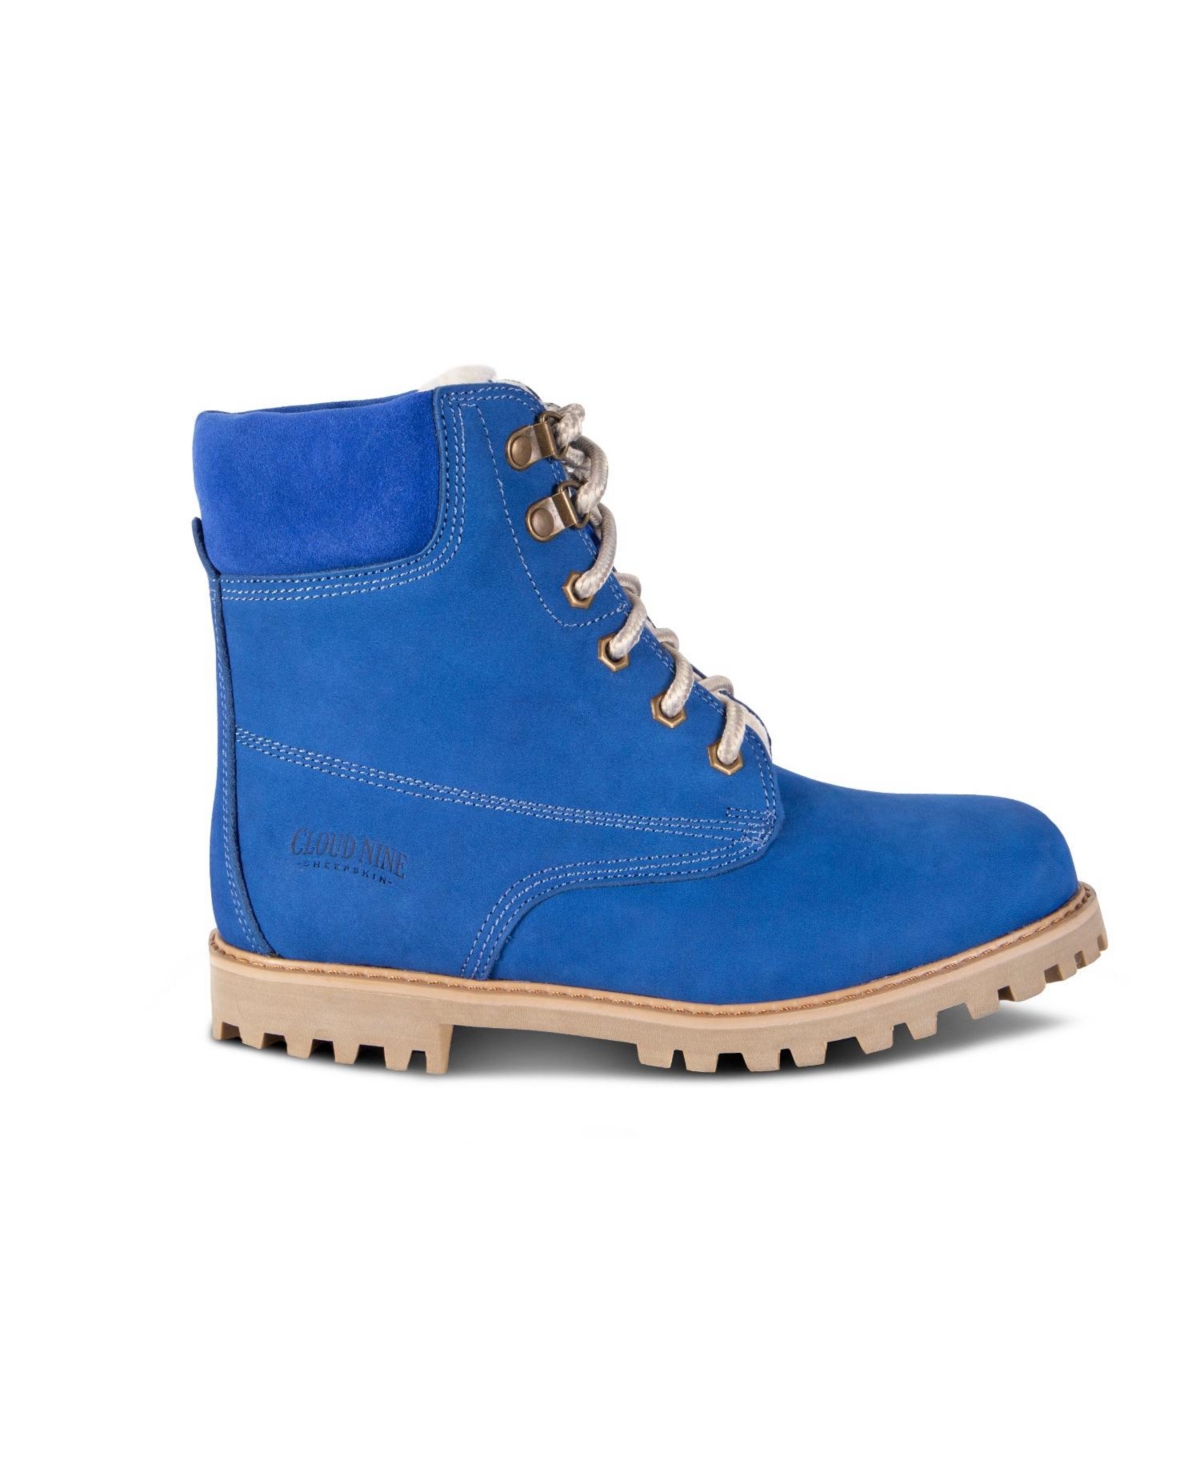 Ladies Kindra Comfort Hiking Boots - Blue